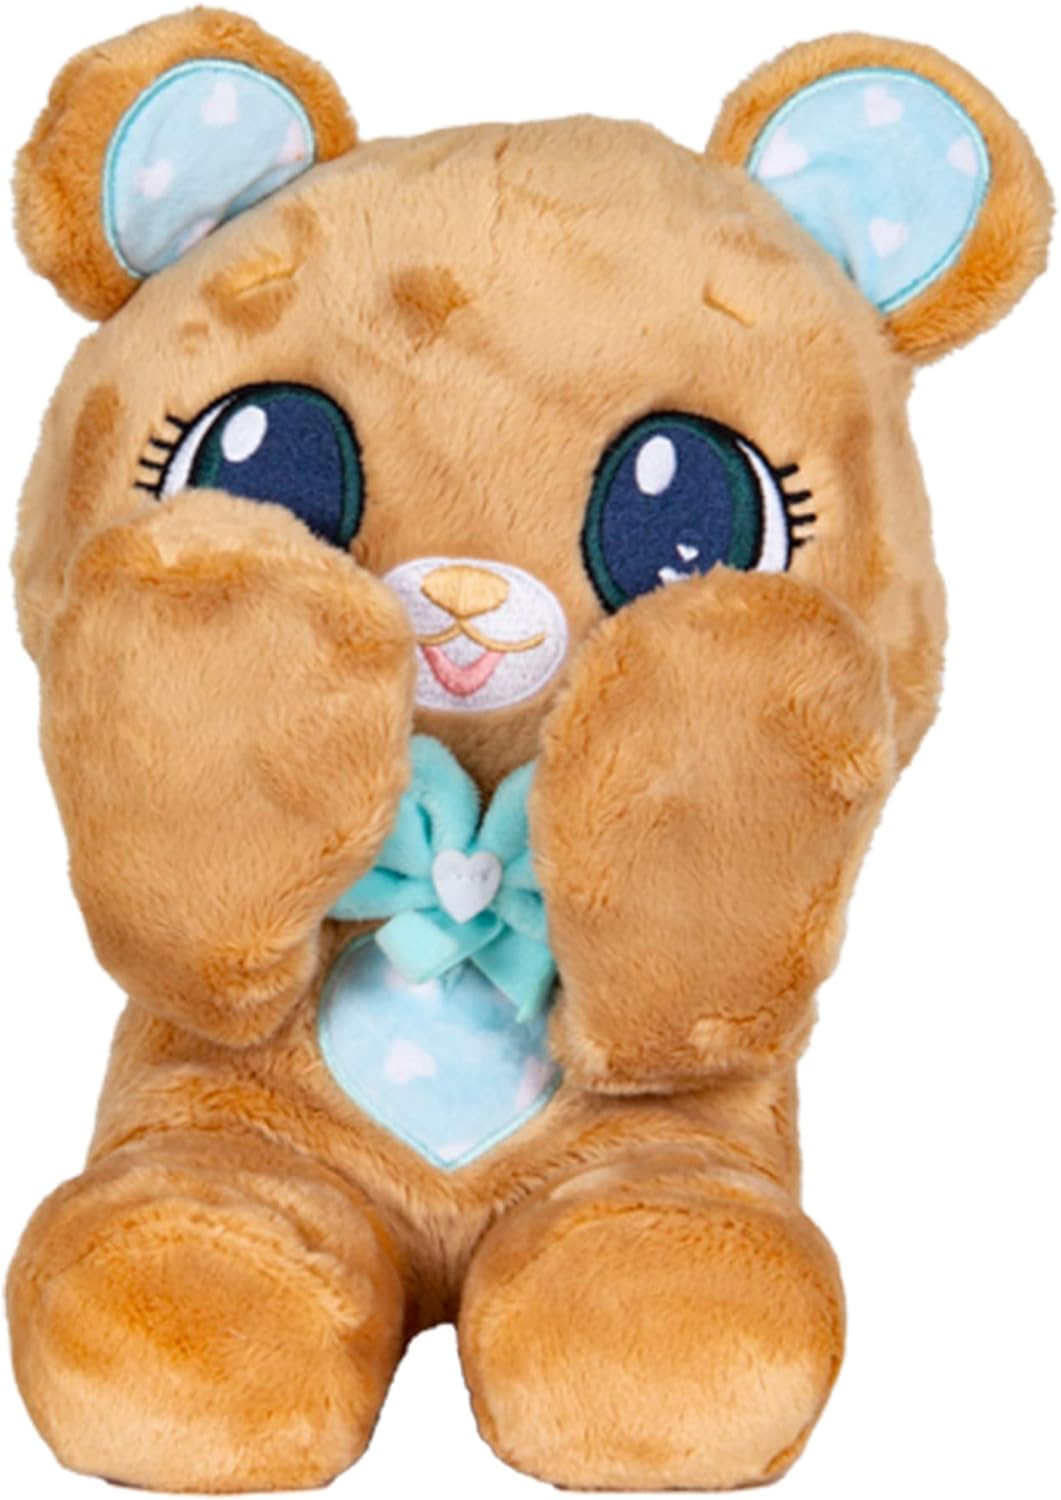 Peek-A-Boo Bear Plush - Stuffed Animal, Brown Bear Plush Doll - Great Gift for Kids Ages 1-3